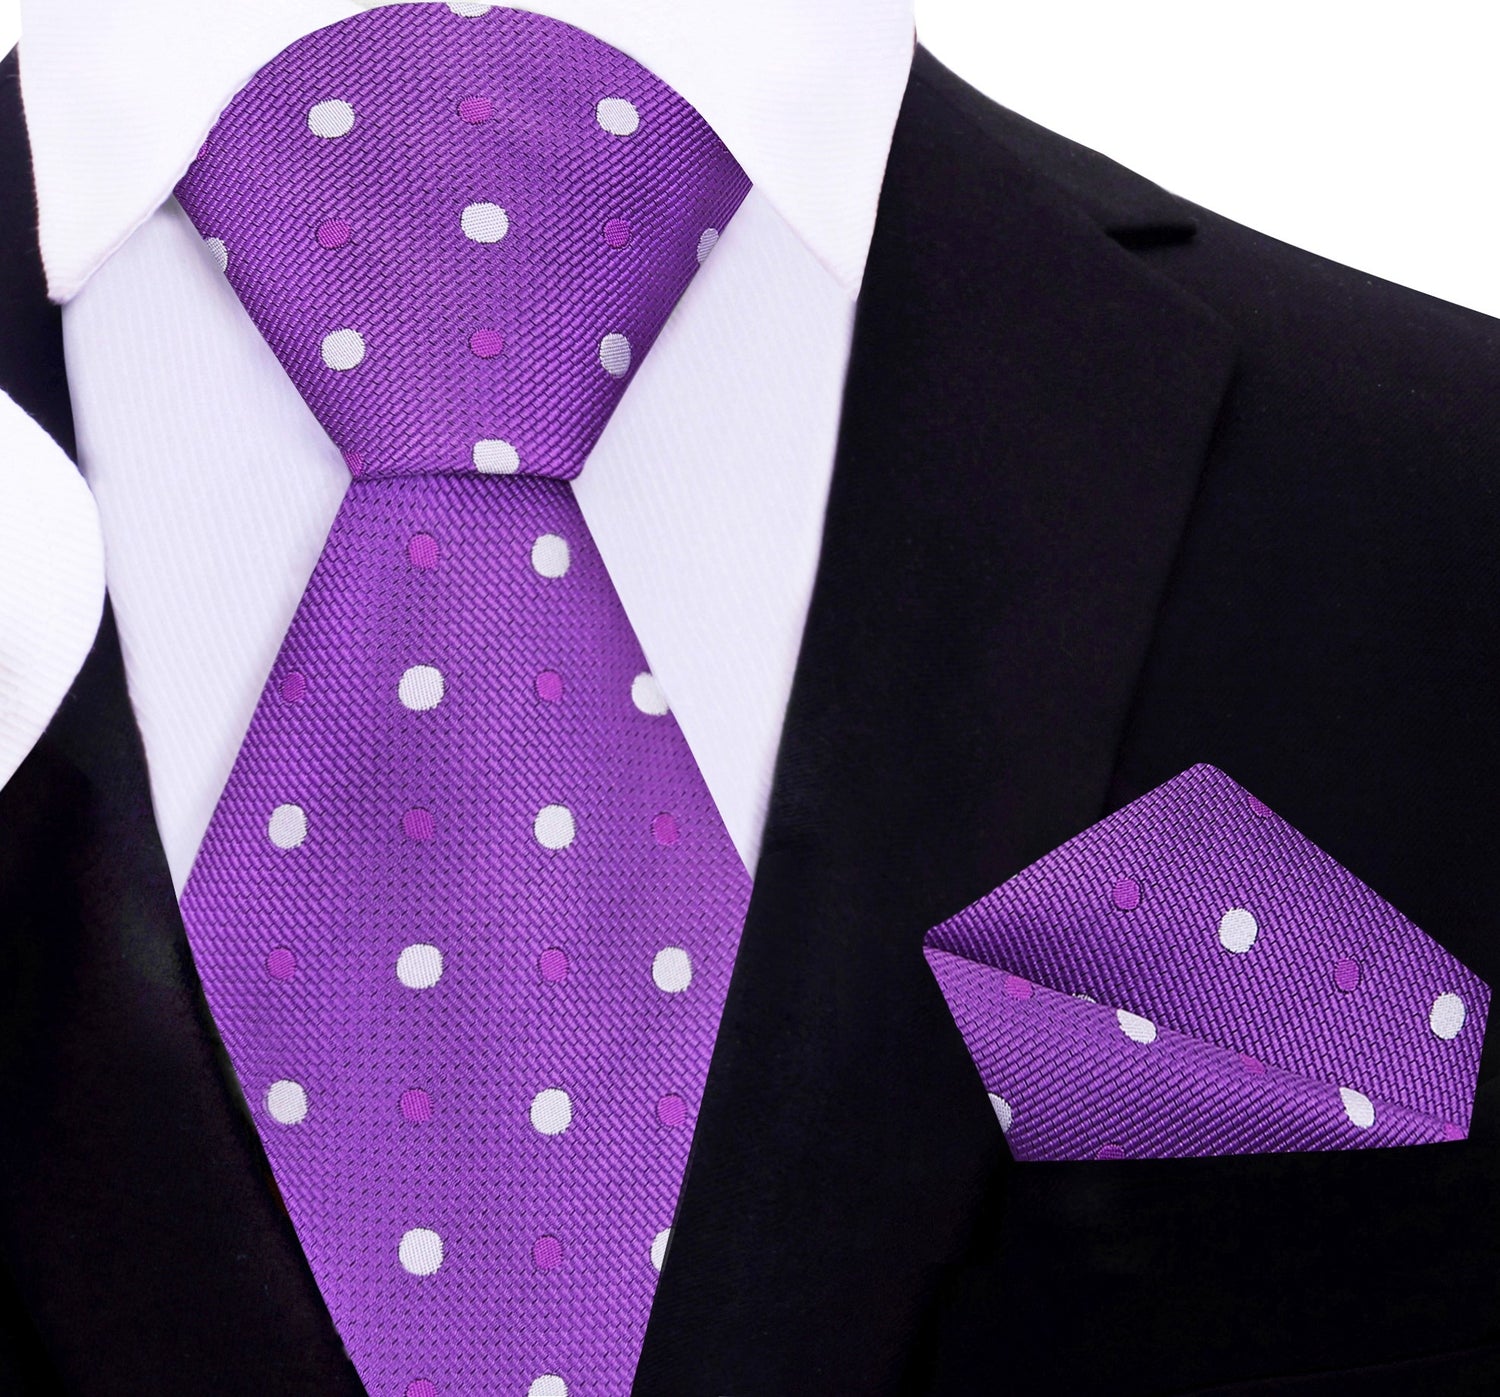 A Purple, White Polka Dot Pattern Necktie, Matching Pocket Square